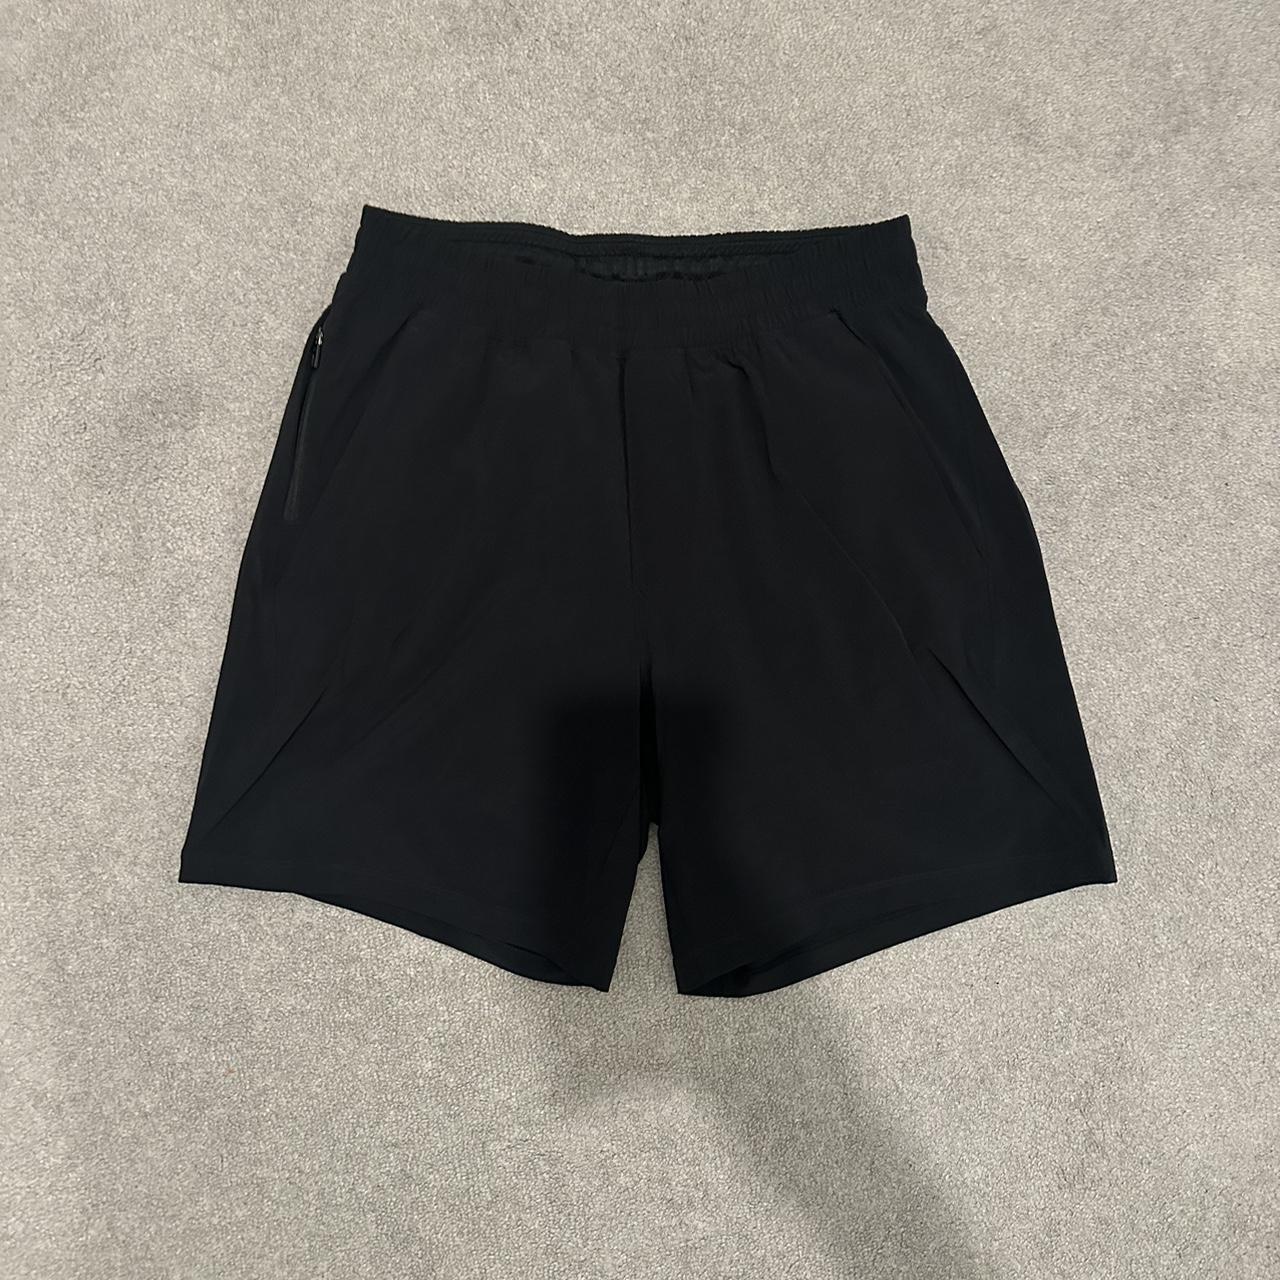 Men’s lululemon shorts RRP £58 Pace breaker shorts... - Depop